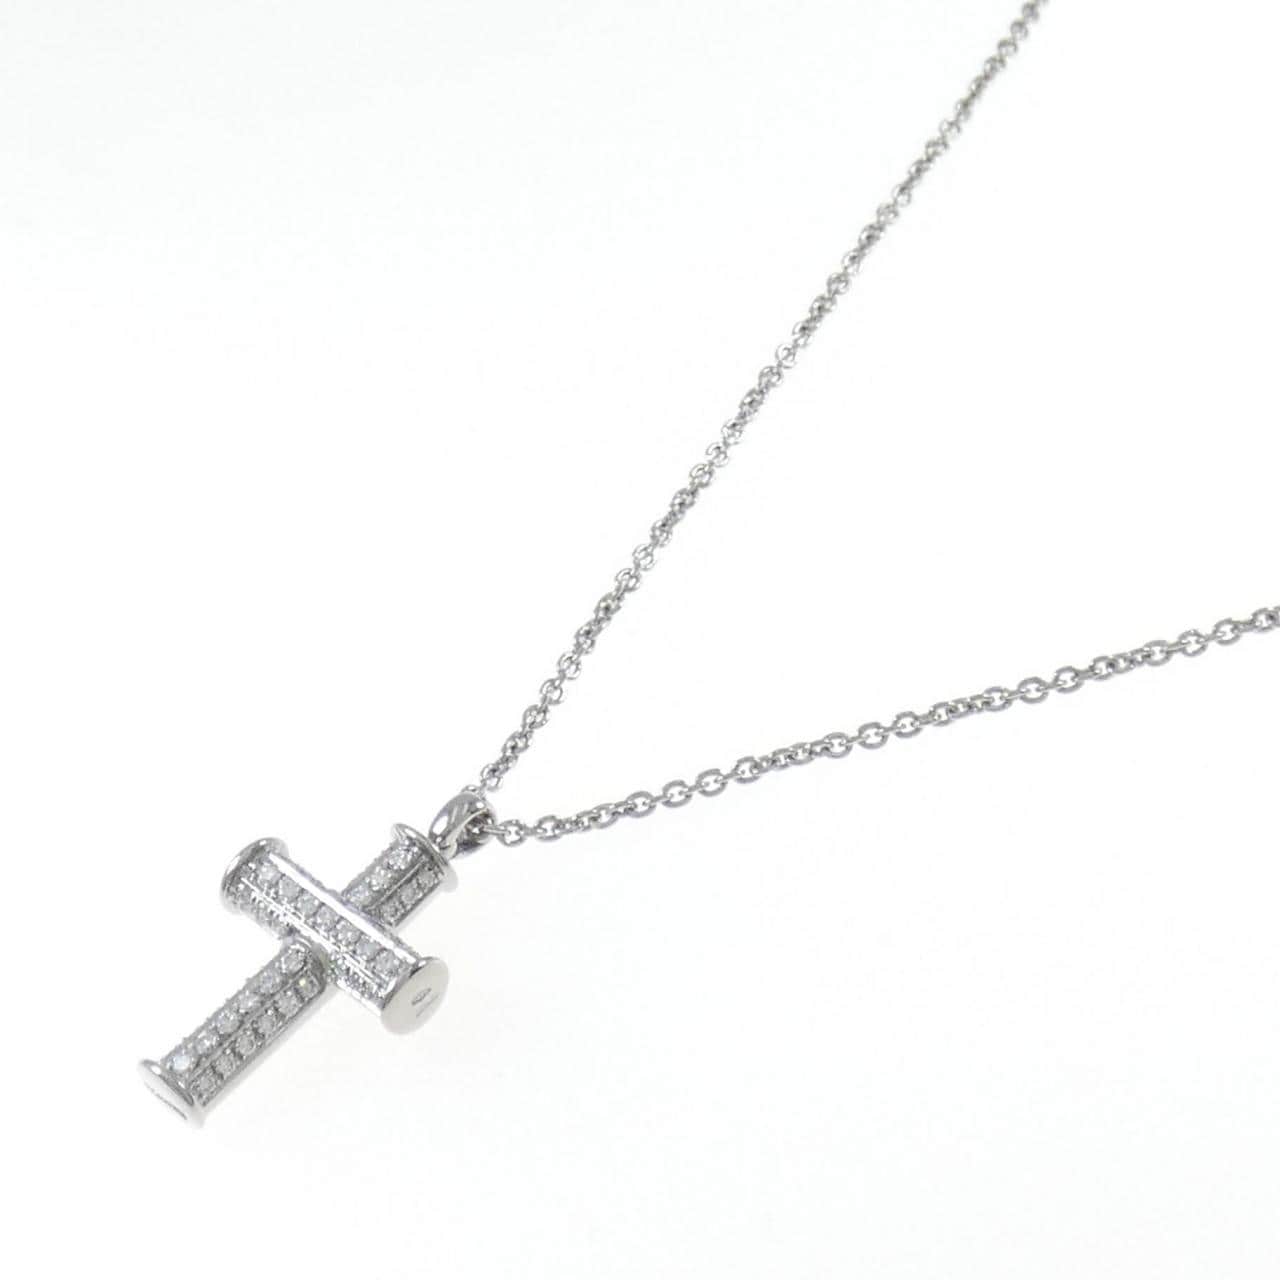 BVLGARI Latin Cross Necklace